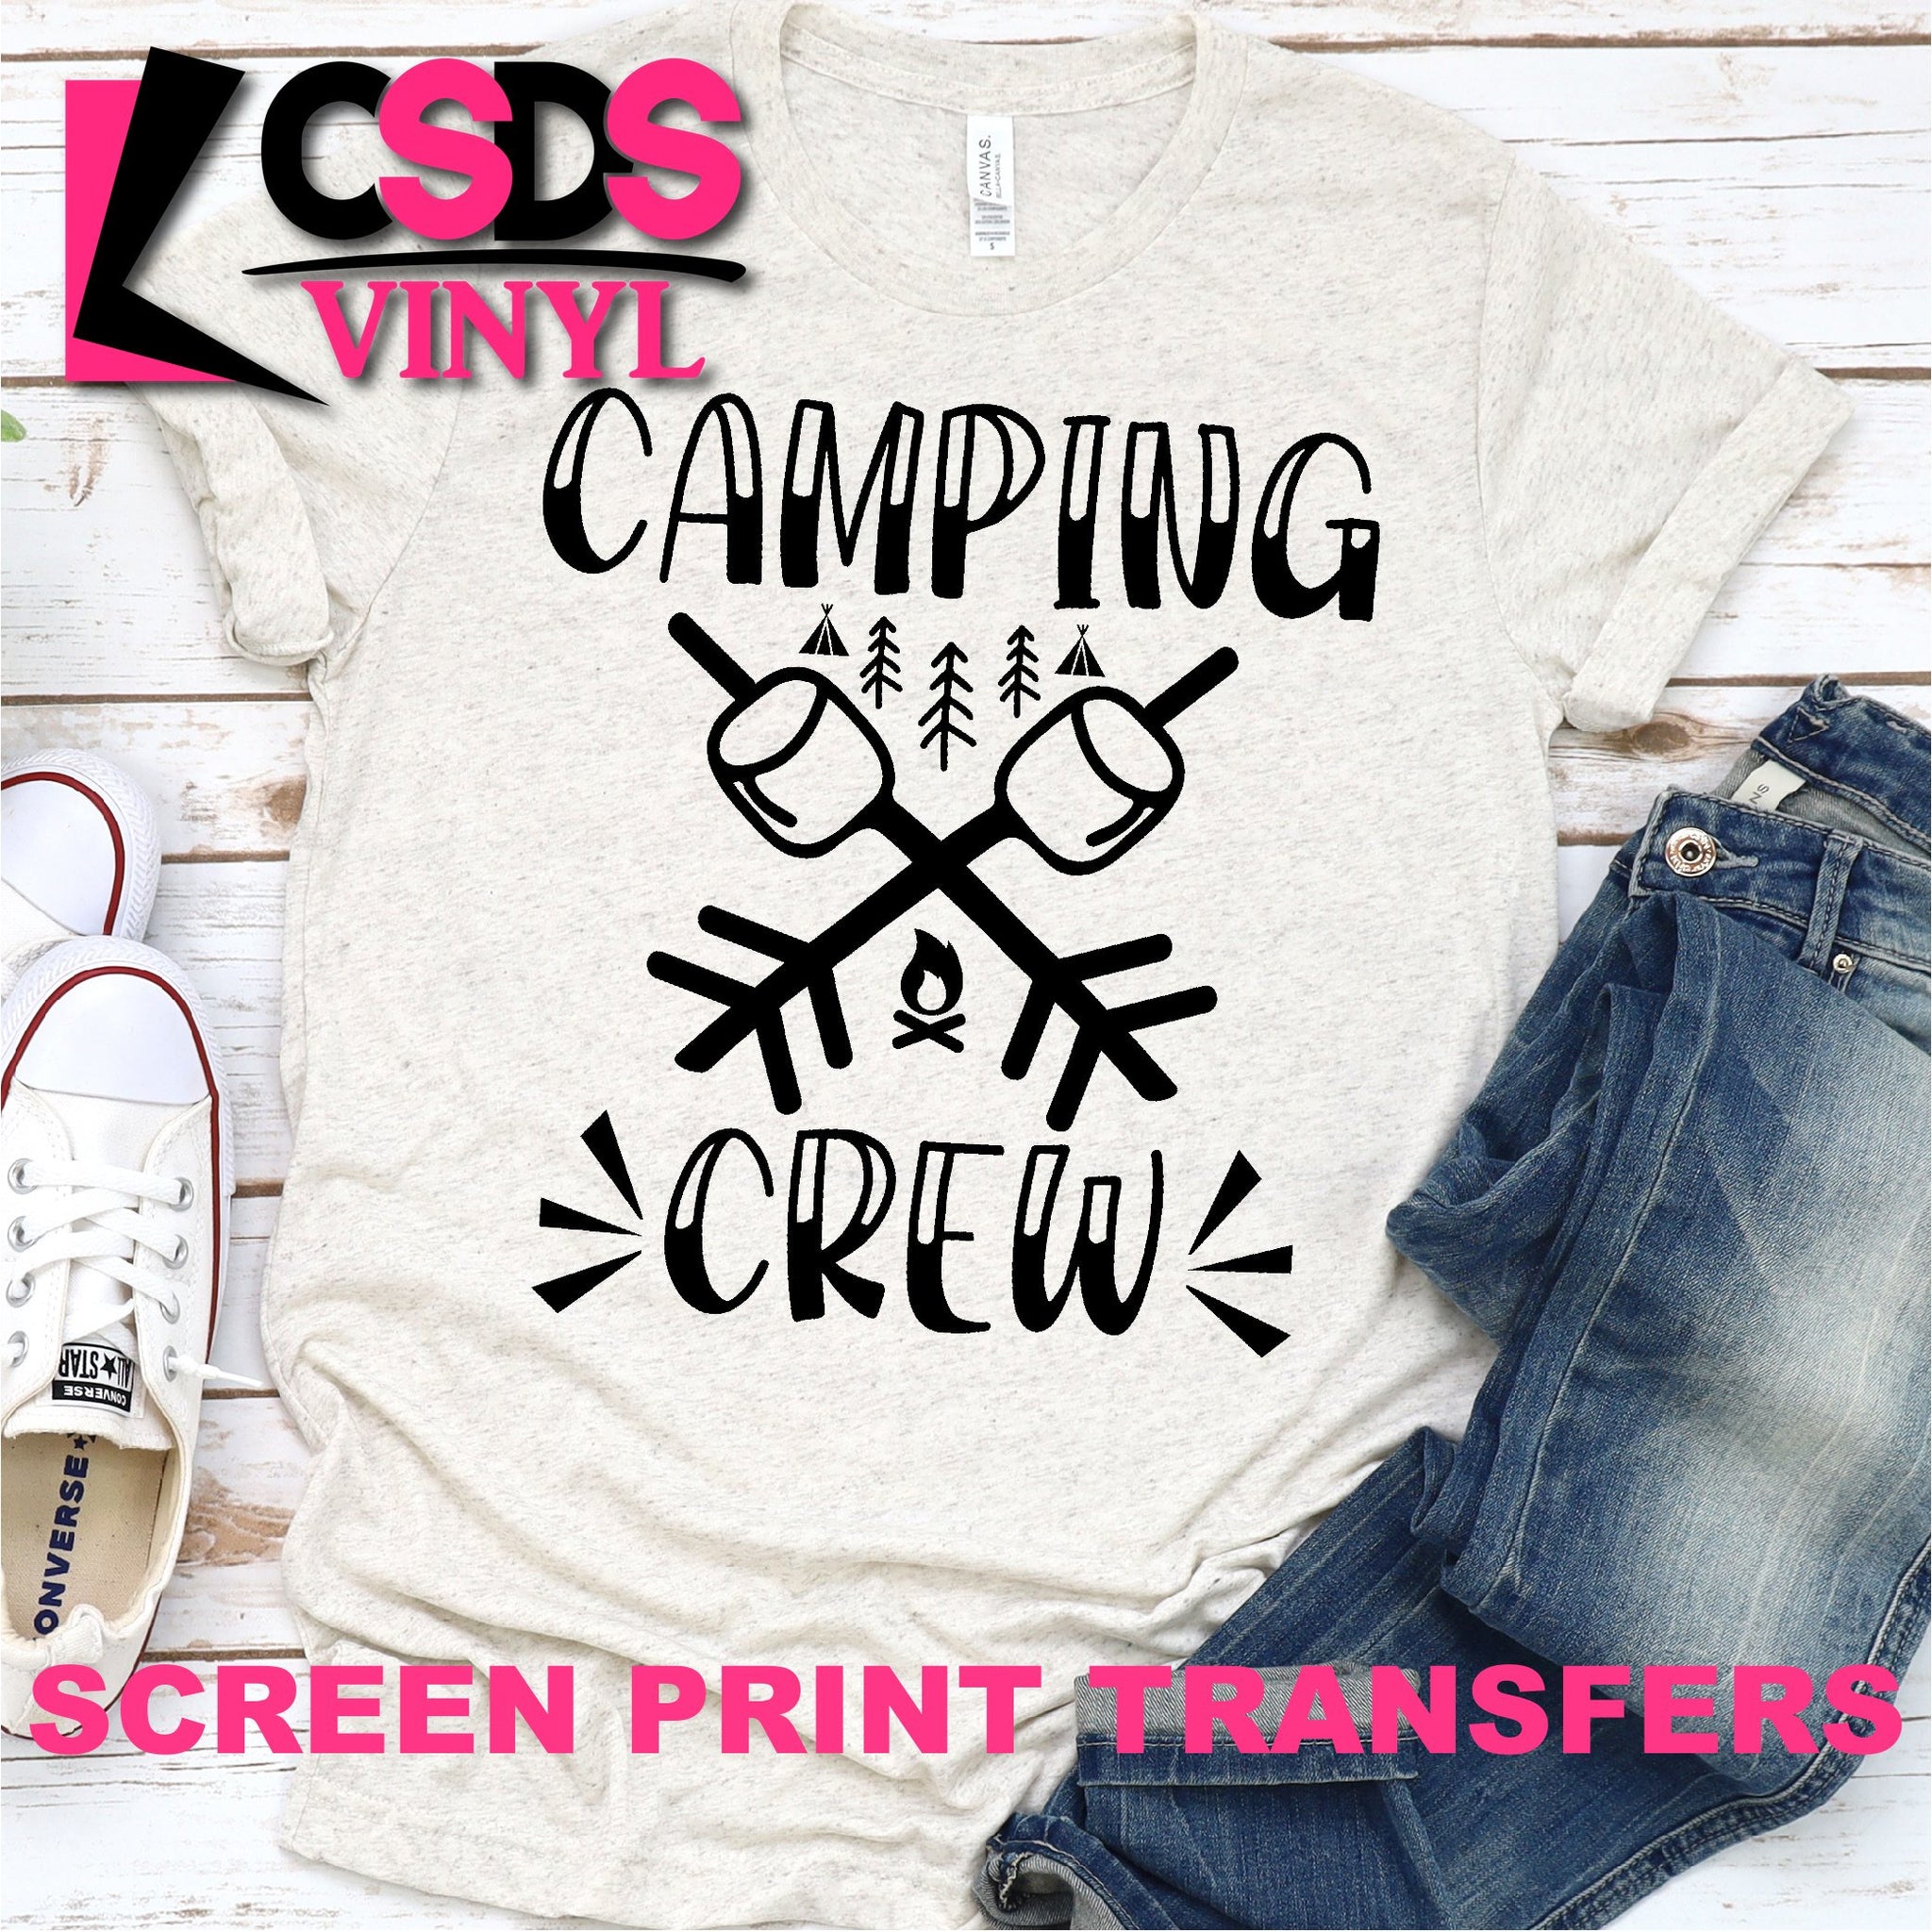 Download Screen Print Transfer Camping Crew Black Csds Vinyl